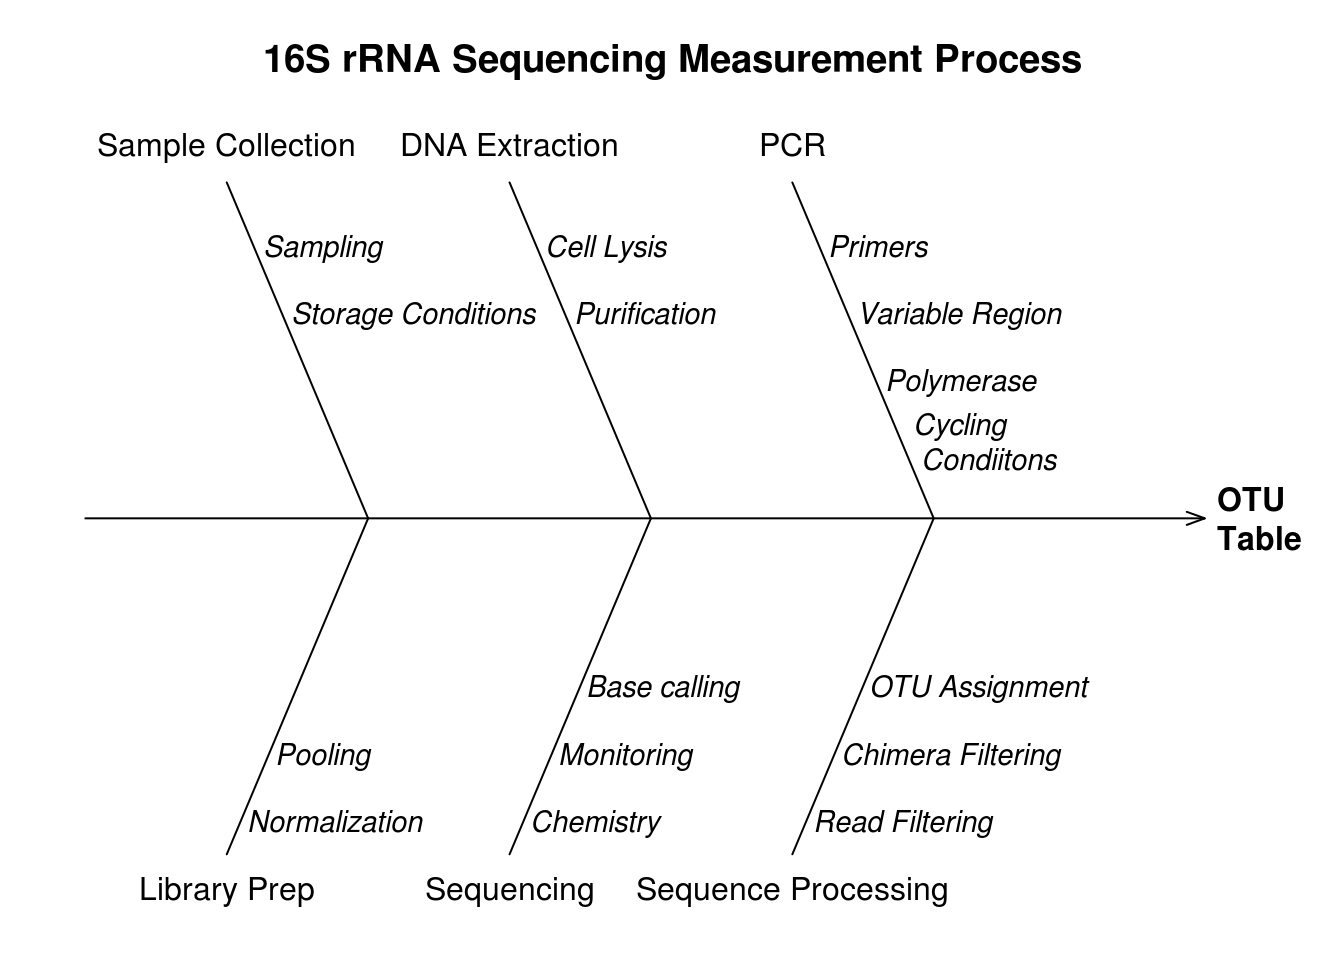 Fishbone diagram of the 16S rRNA metagenomic sequencing measurement process.